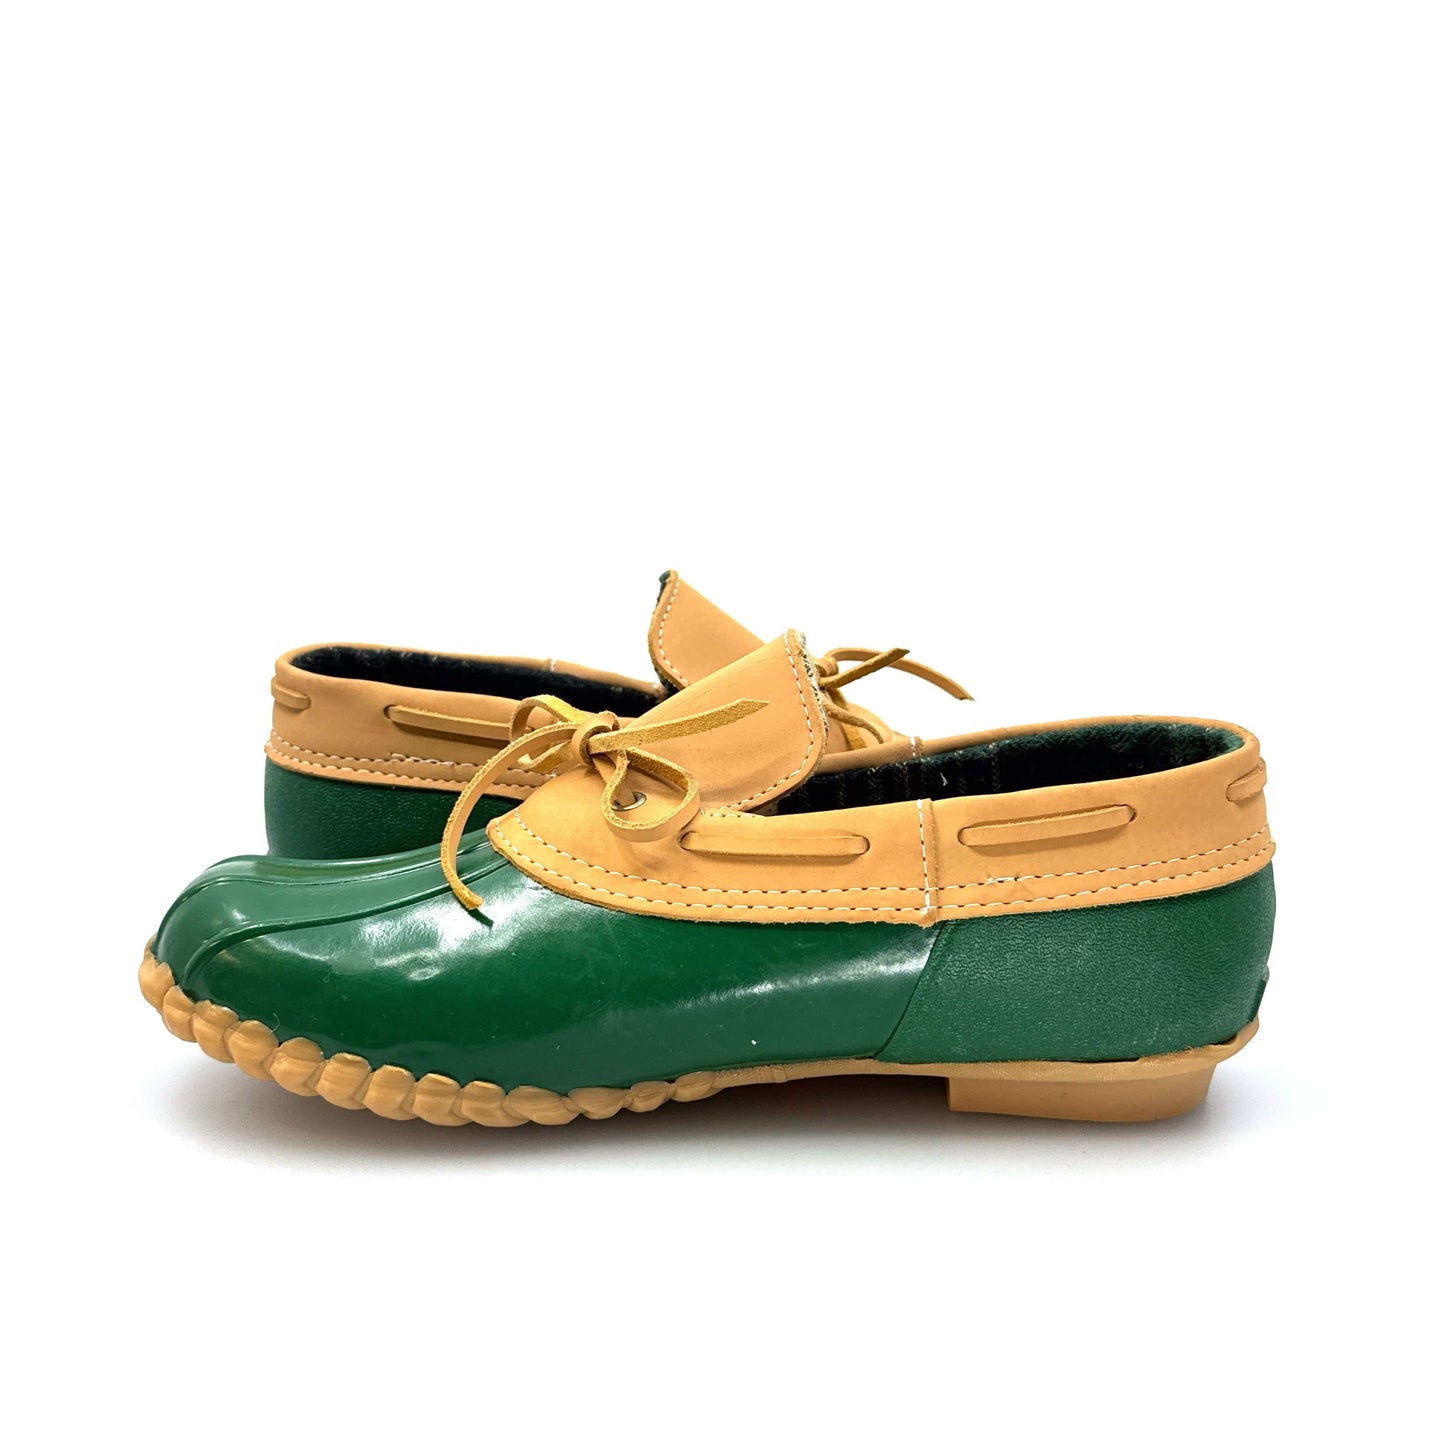 Aqua Stop Womens Size 10M Green Waterproof Rubber Leather Duck Boot Shoes EUC